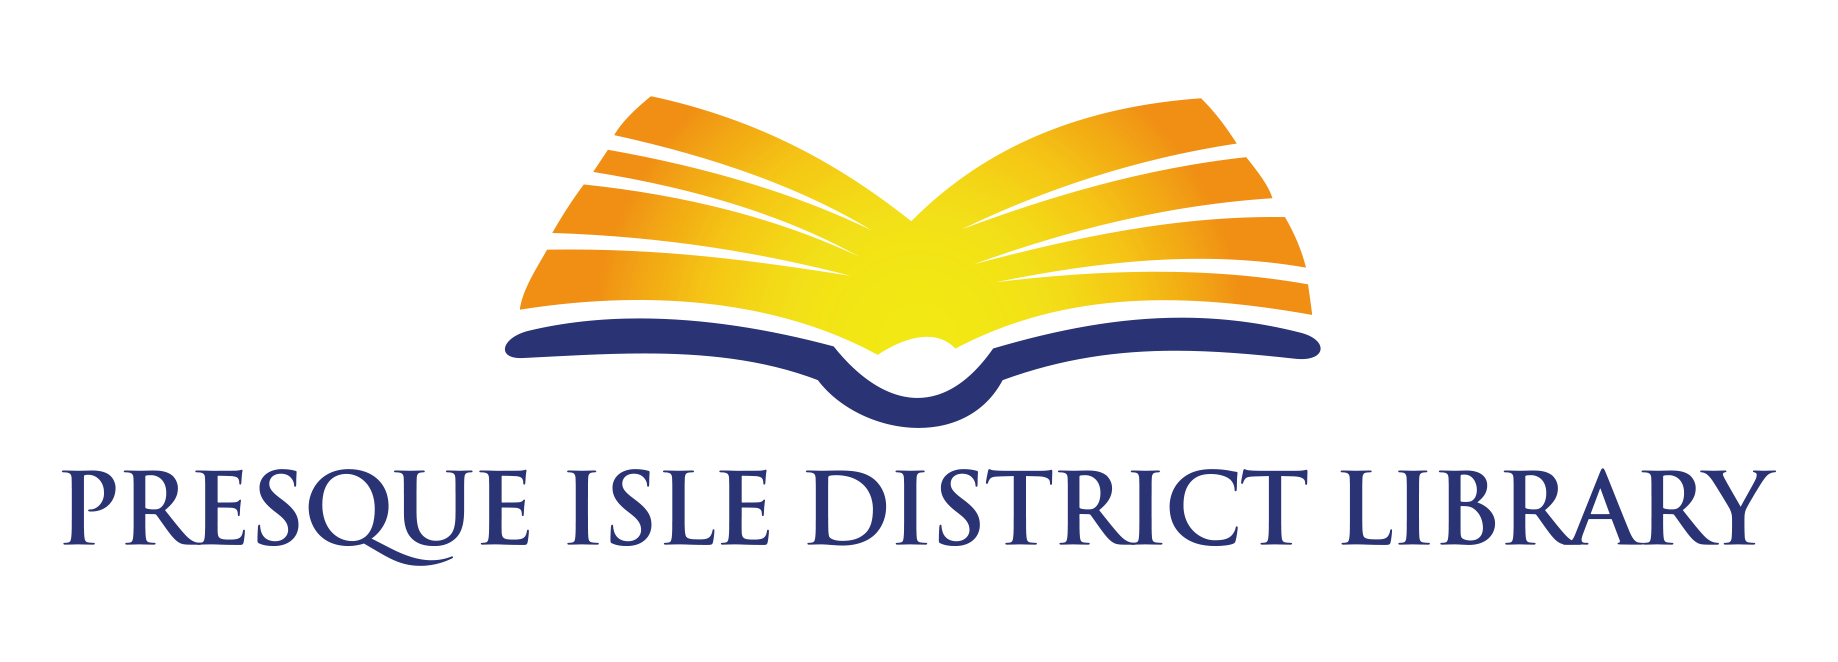 Presque Isle District Library